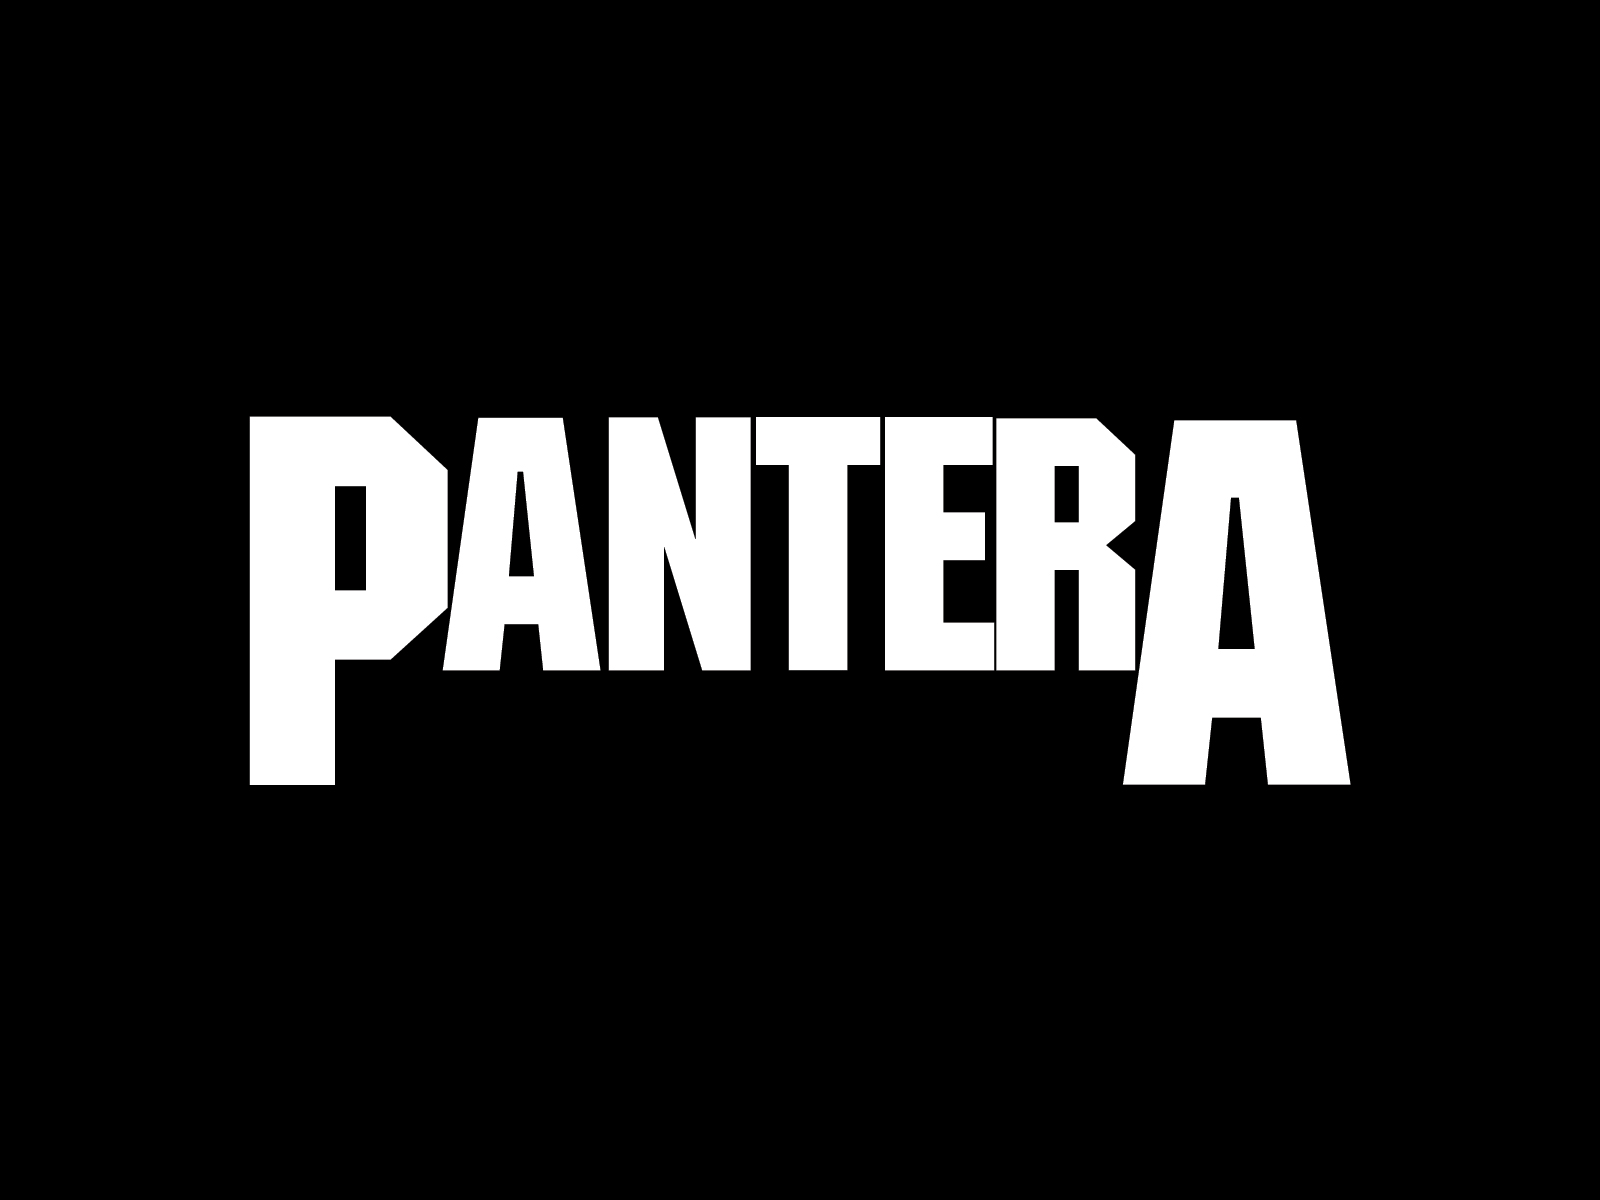 Pantera Wallpaper Video Search Engine At